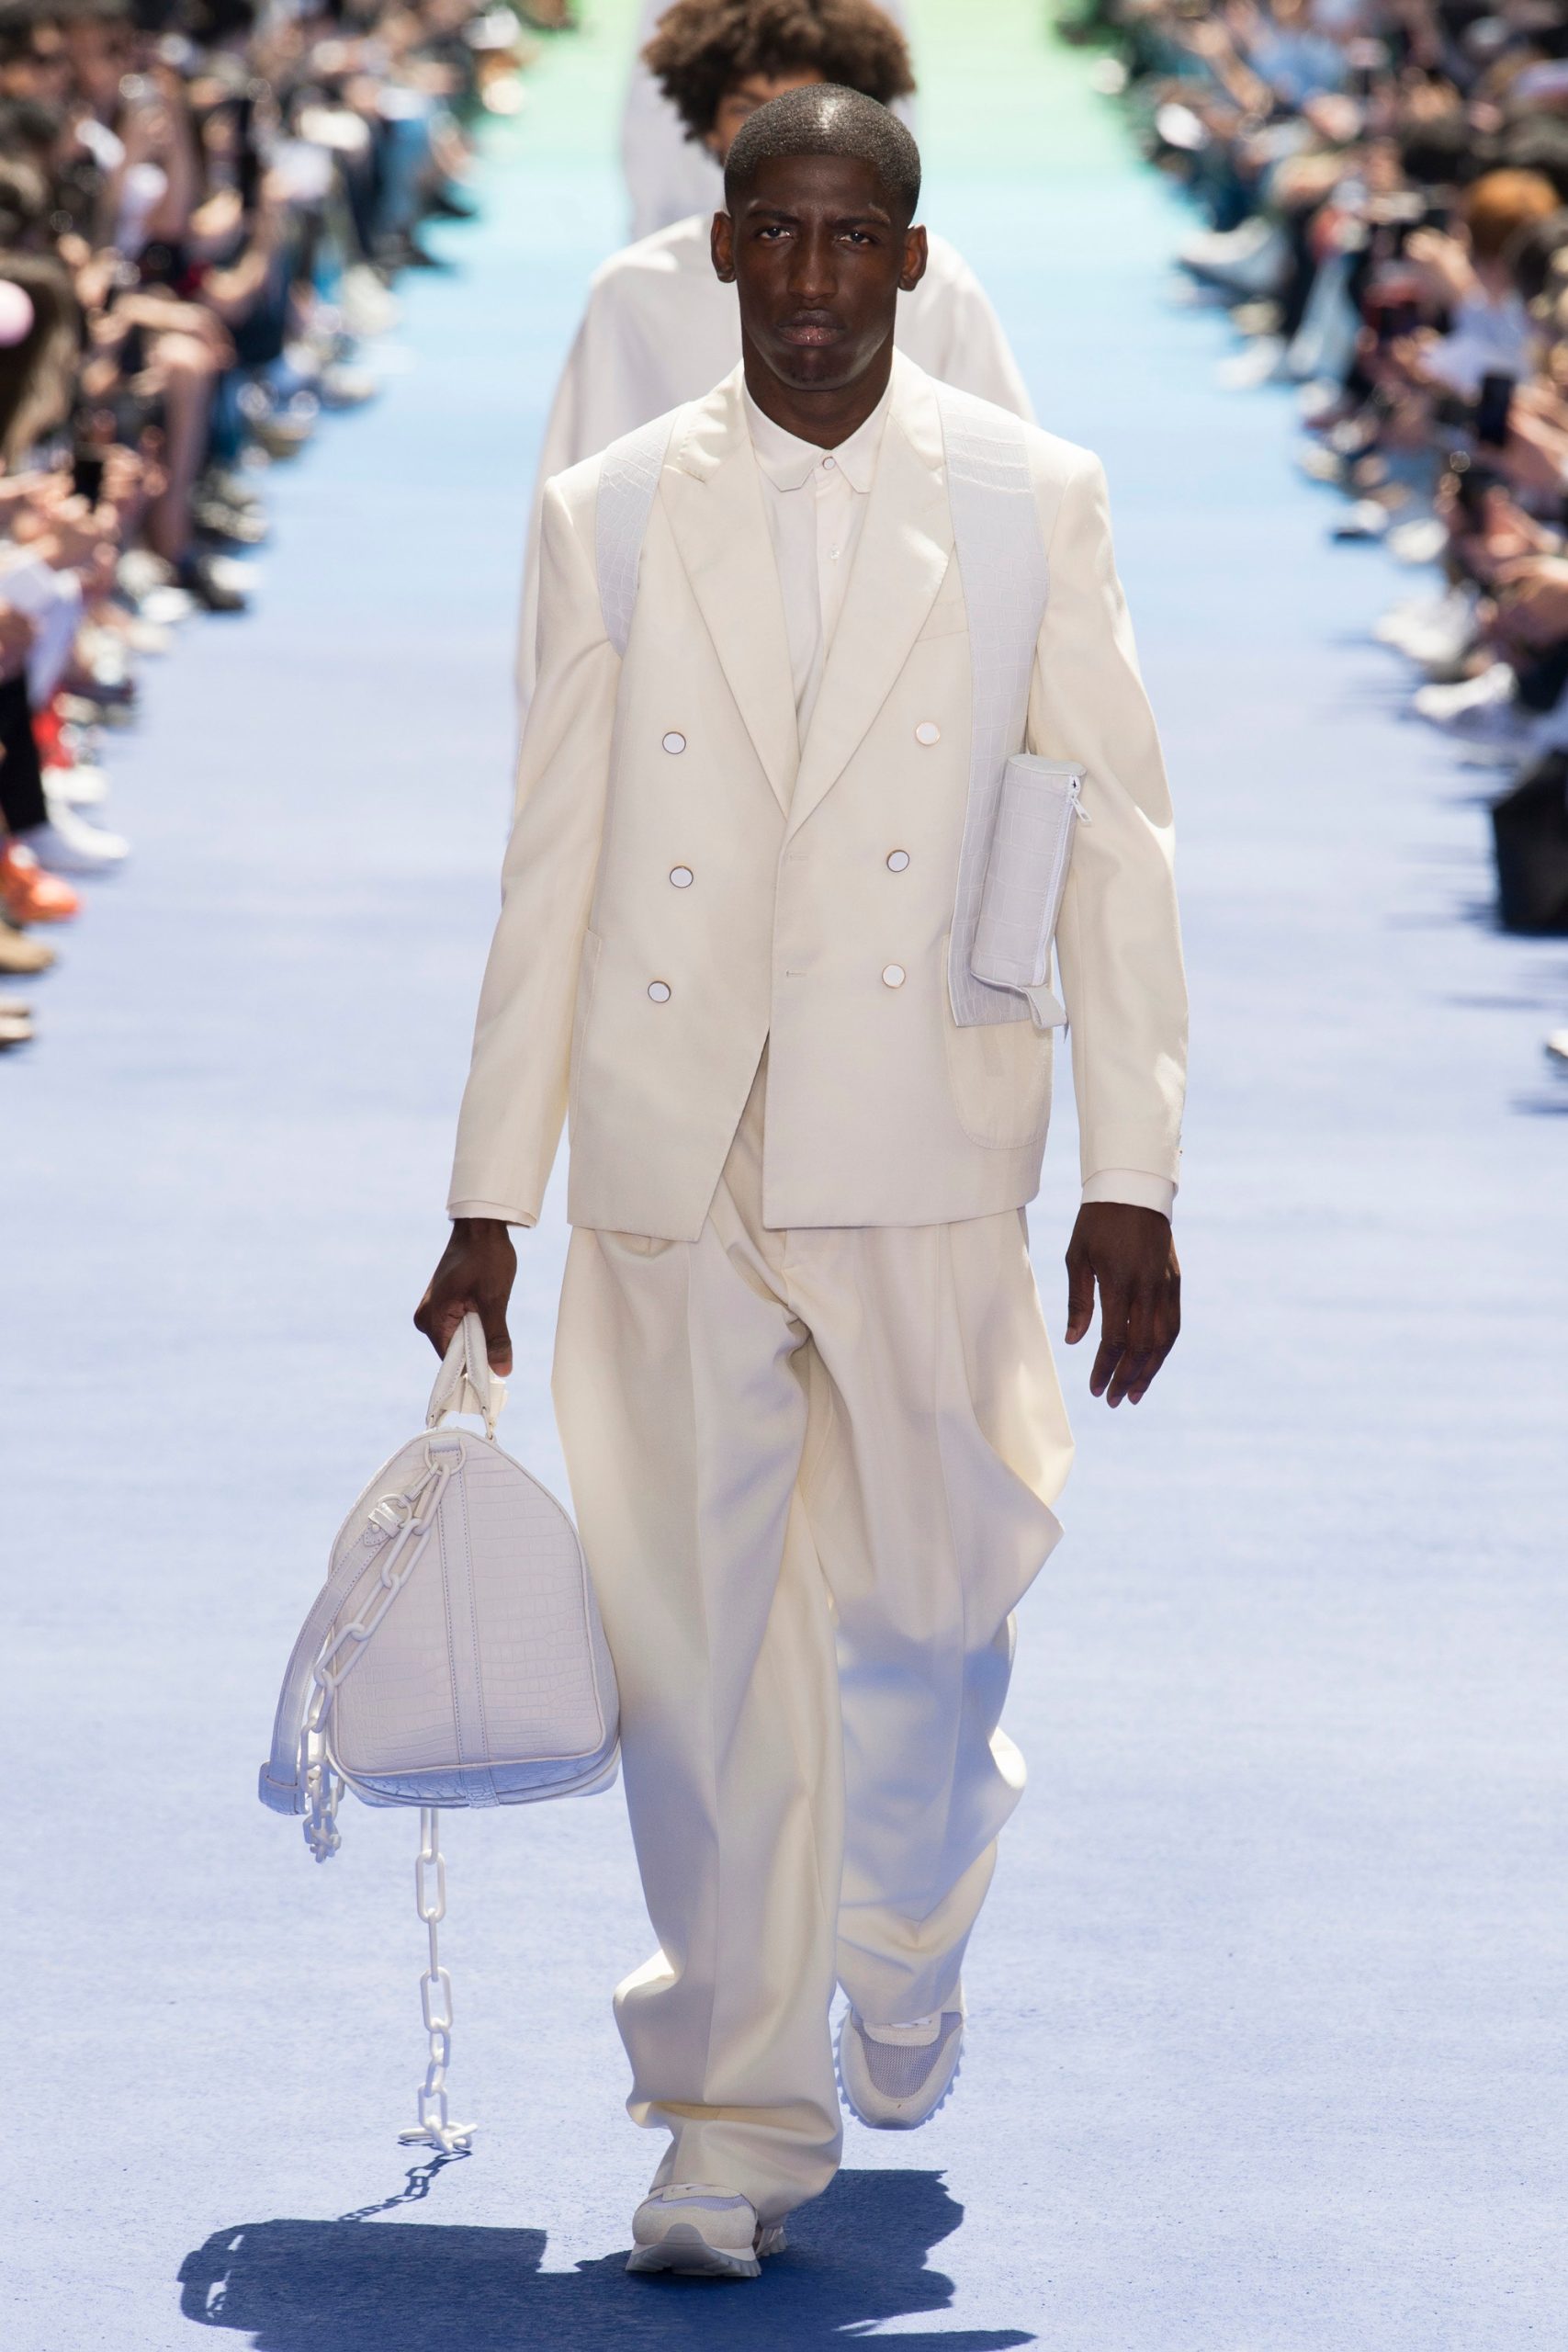 Virgil Abloh announced as Kim Jones' Successor at Louis Vuitton